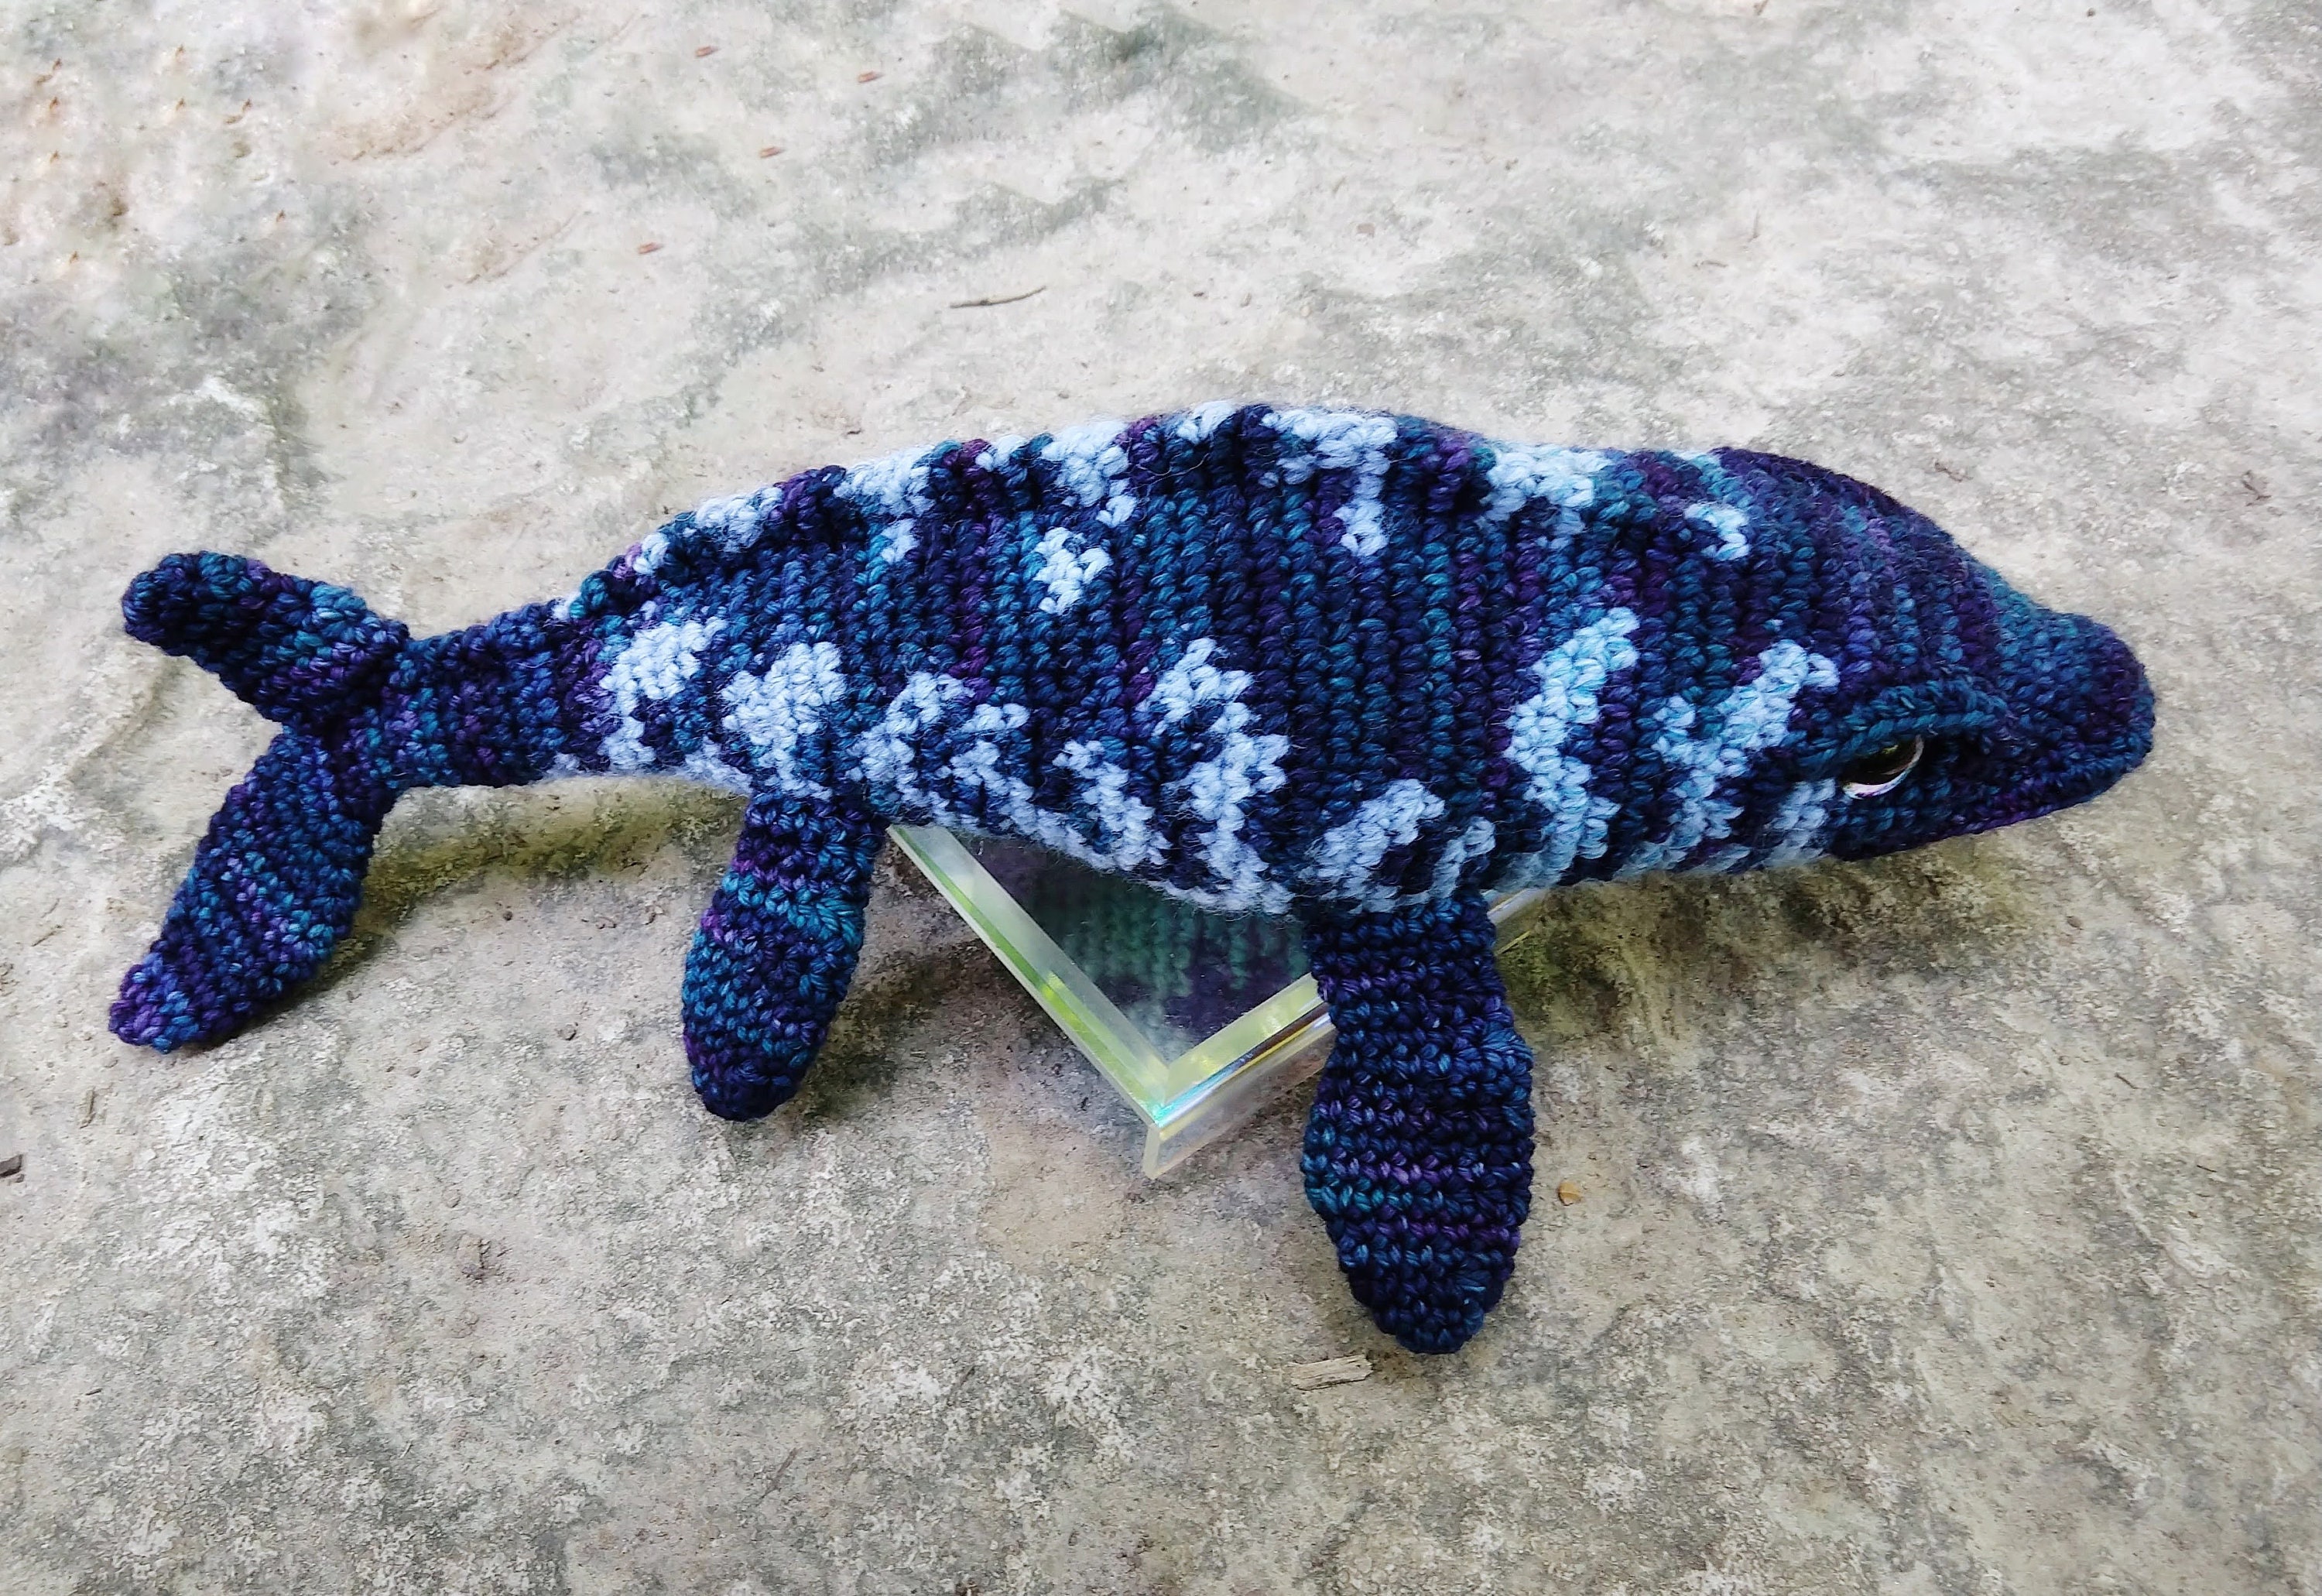 Animal Amigurumi:How to Crochet – MUSEjar